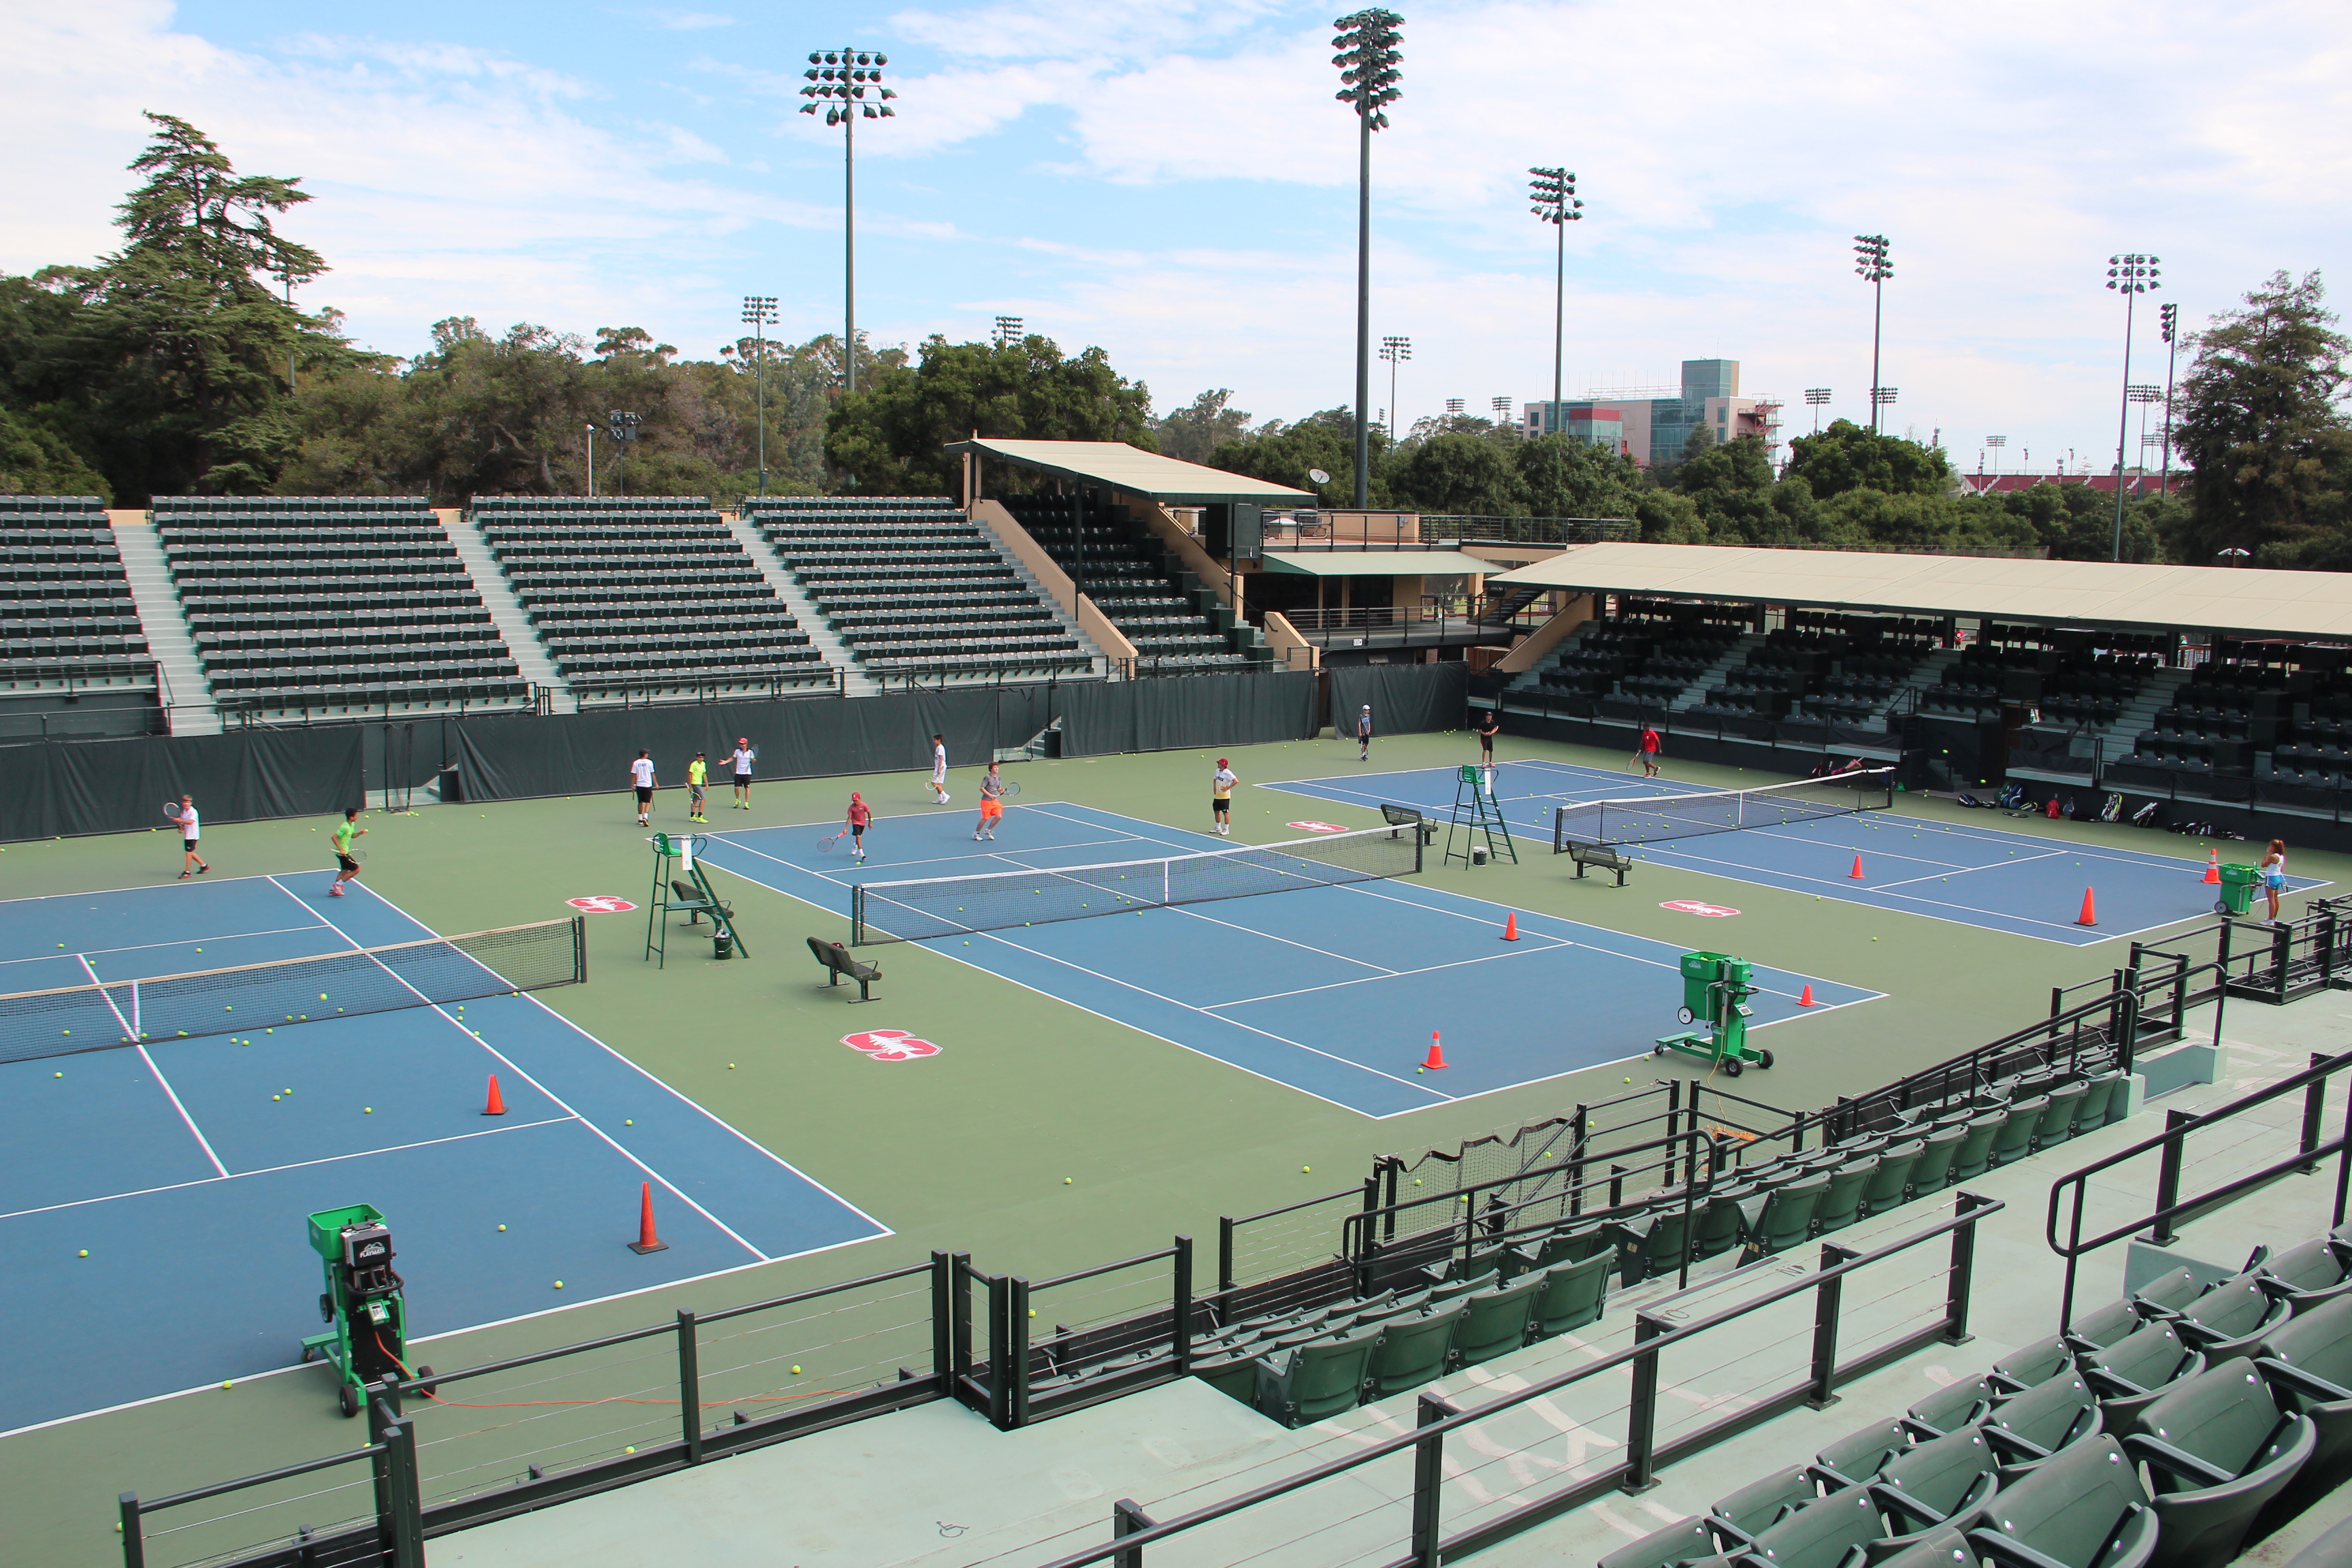 Tennis centre